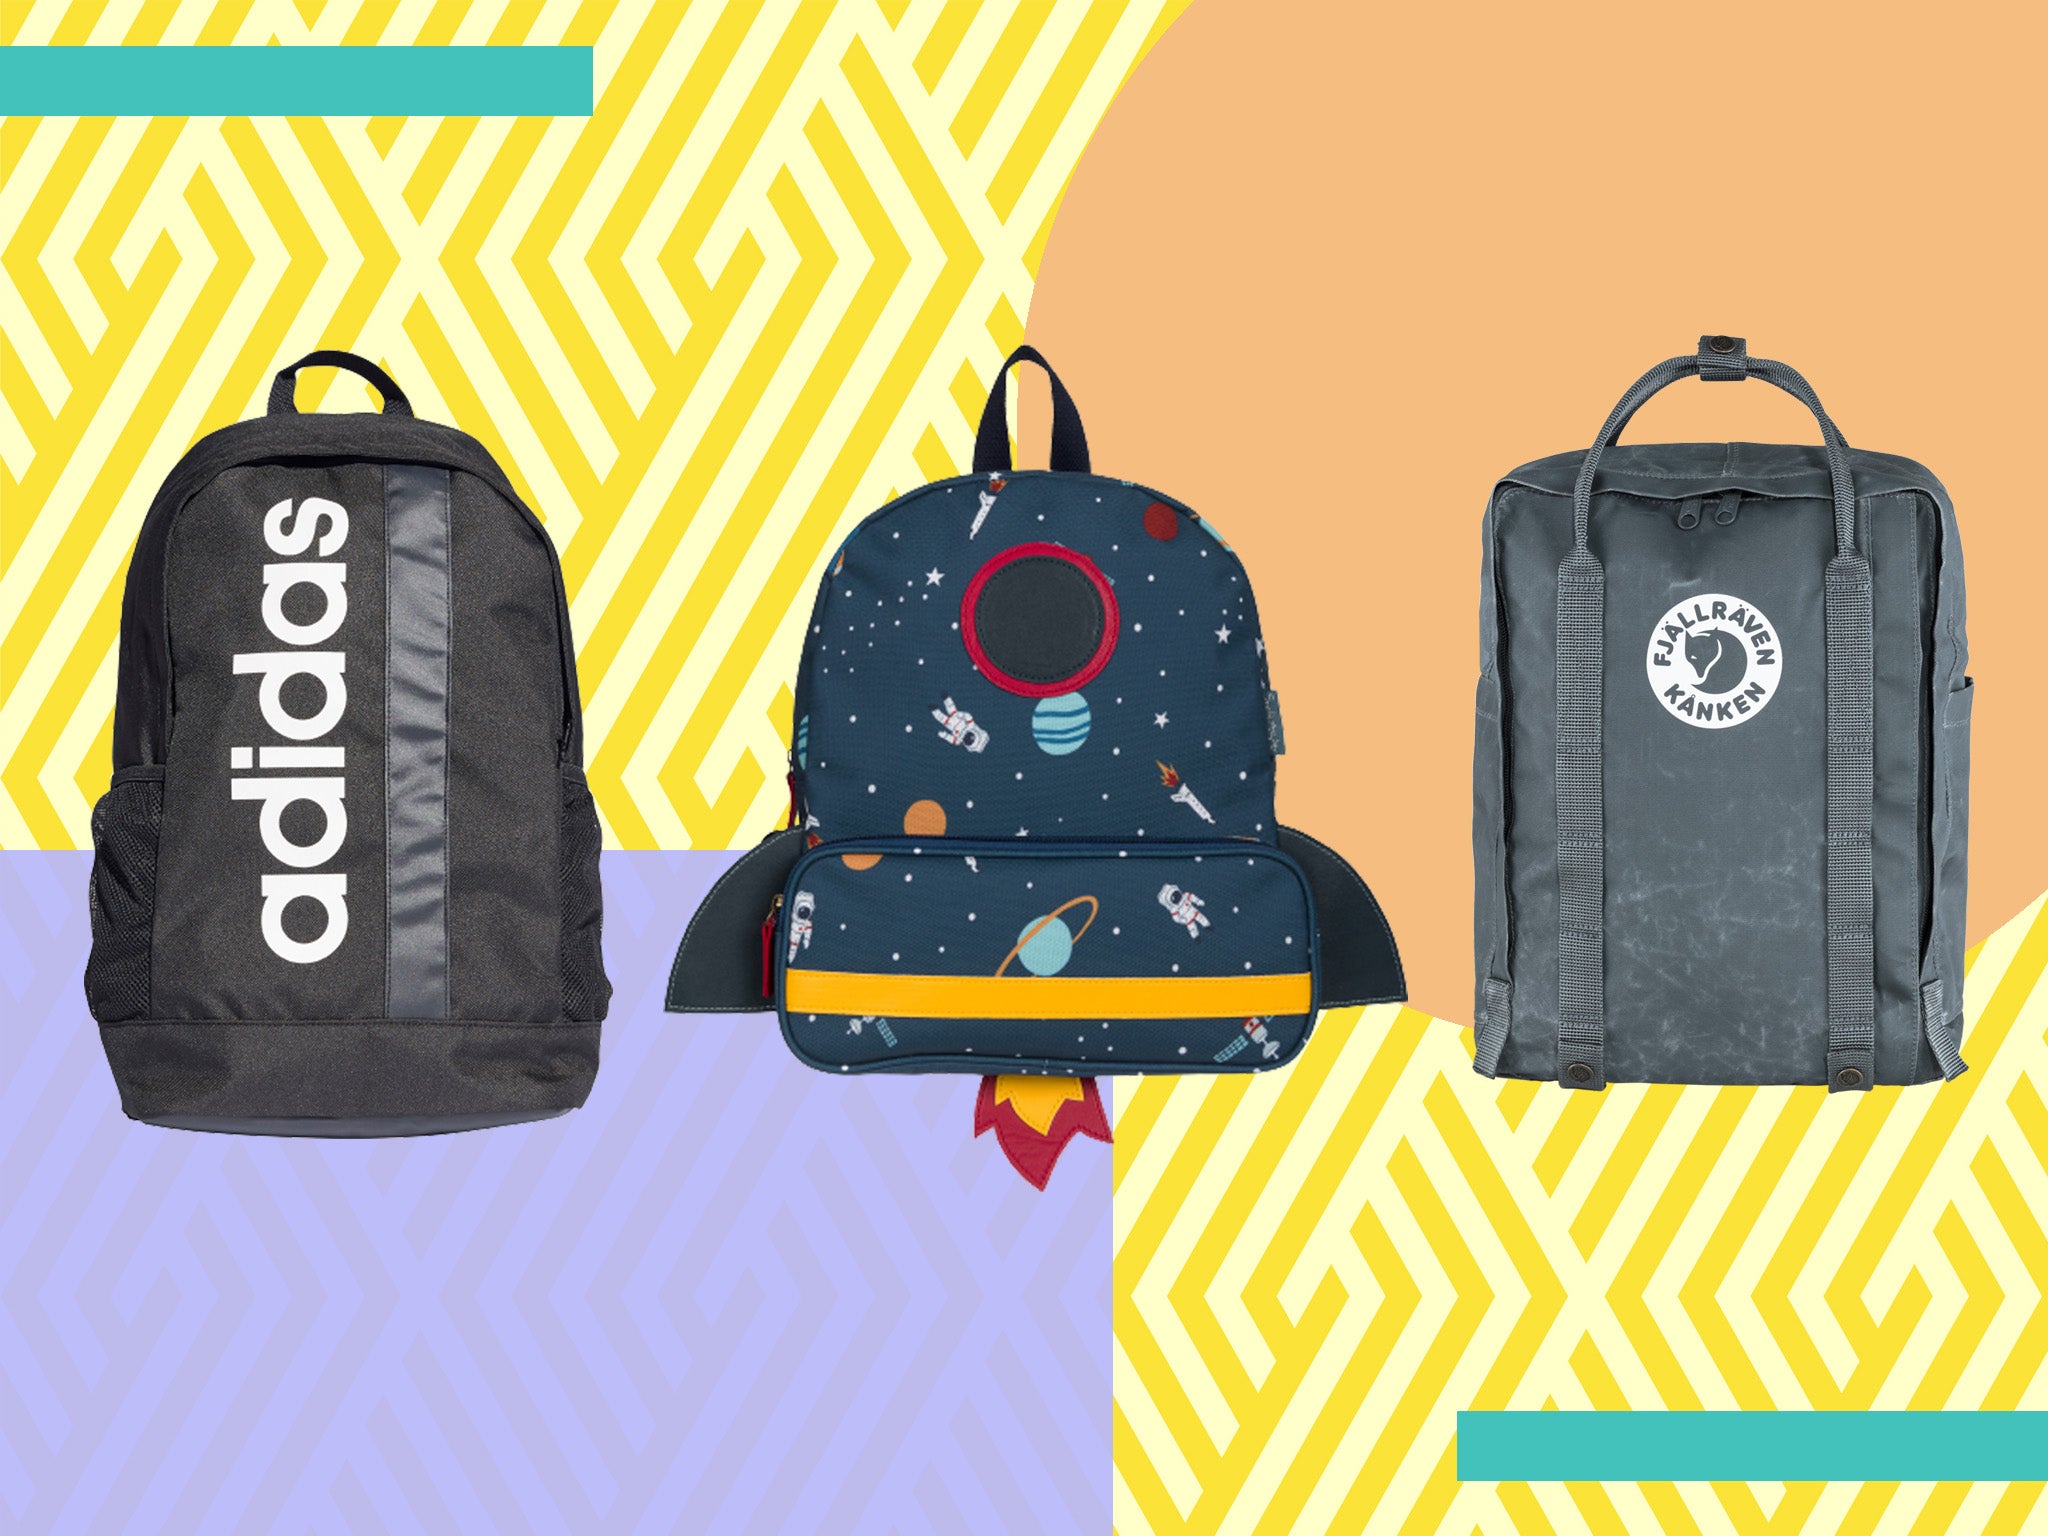 A Fictional Portrayal Cute School Backpack for Women Men Fashion Hiking Travel Bag